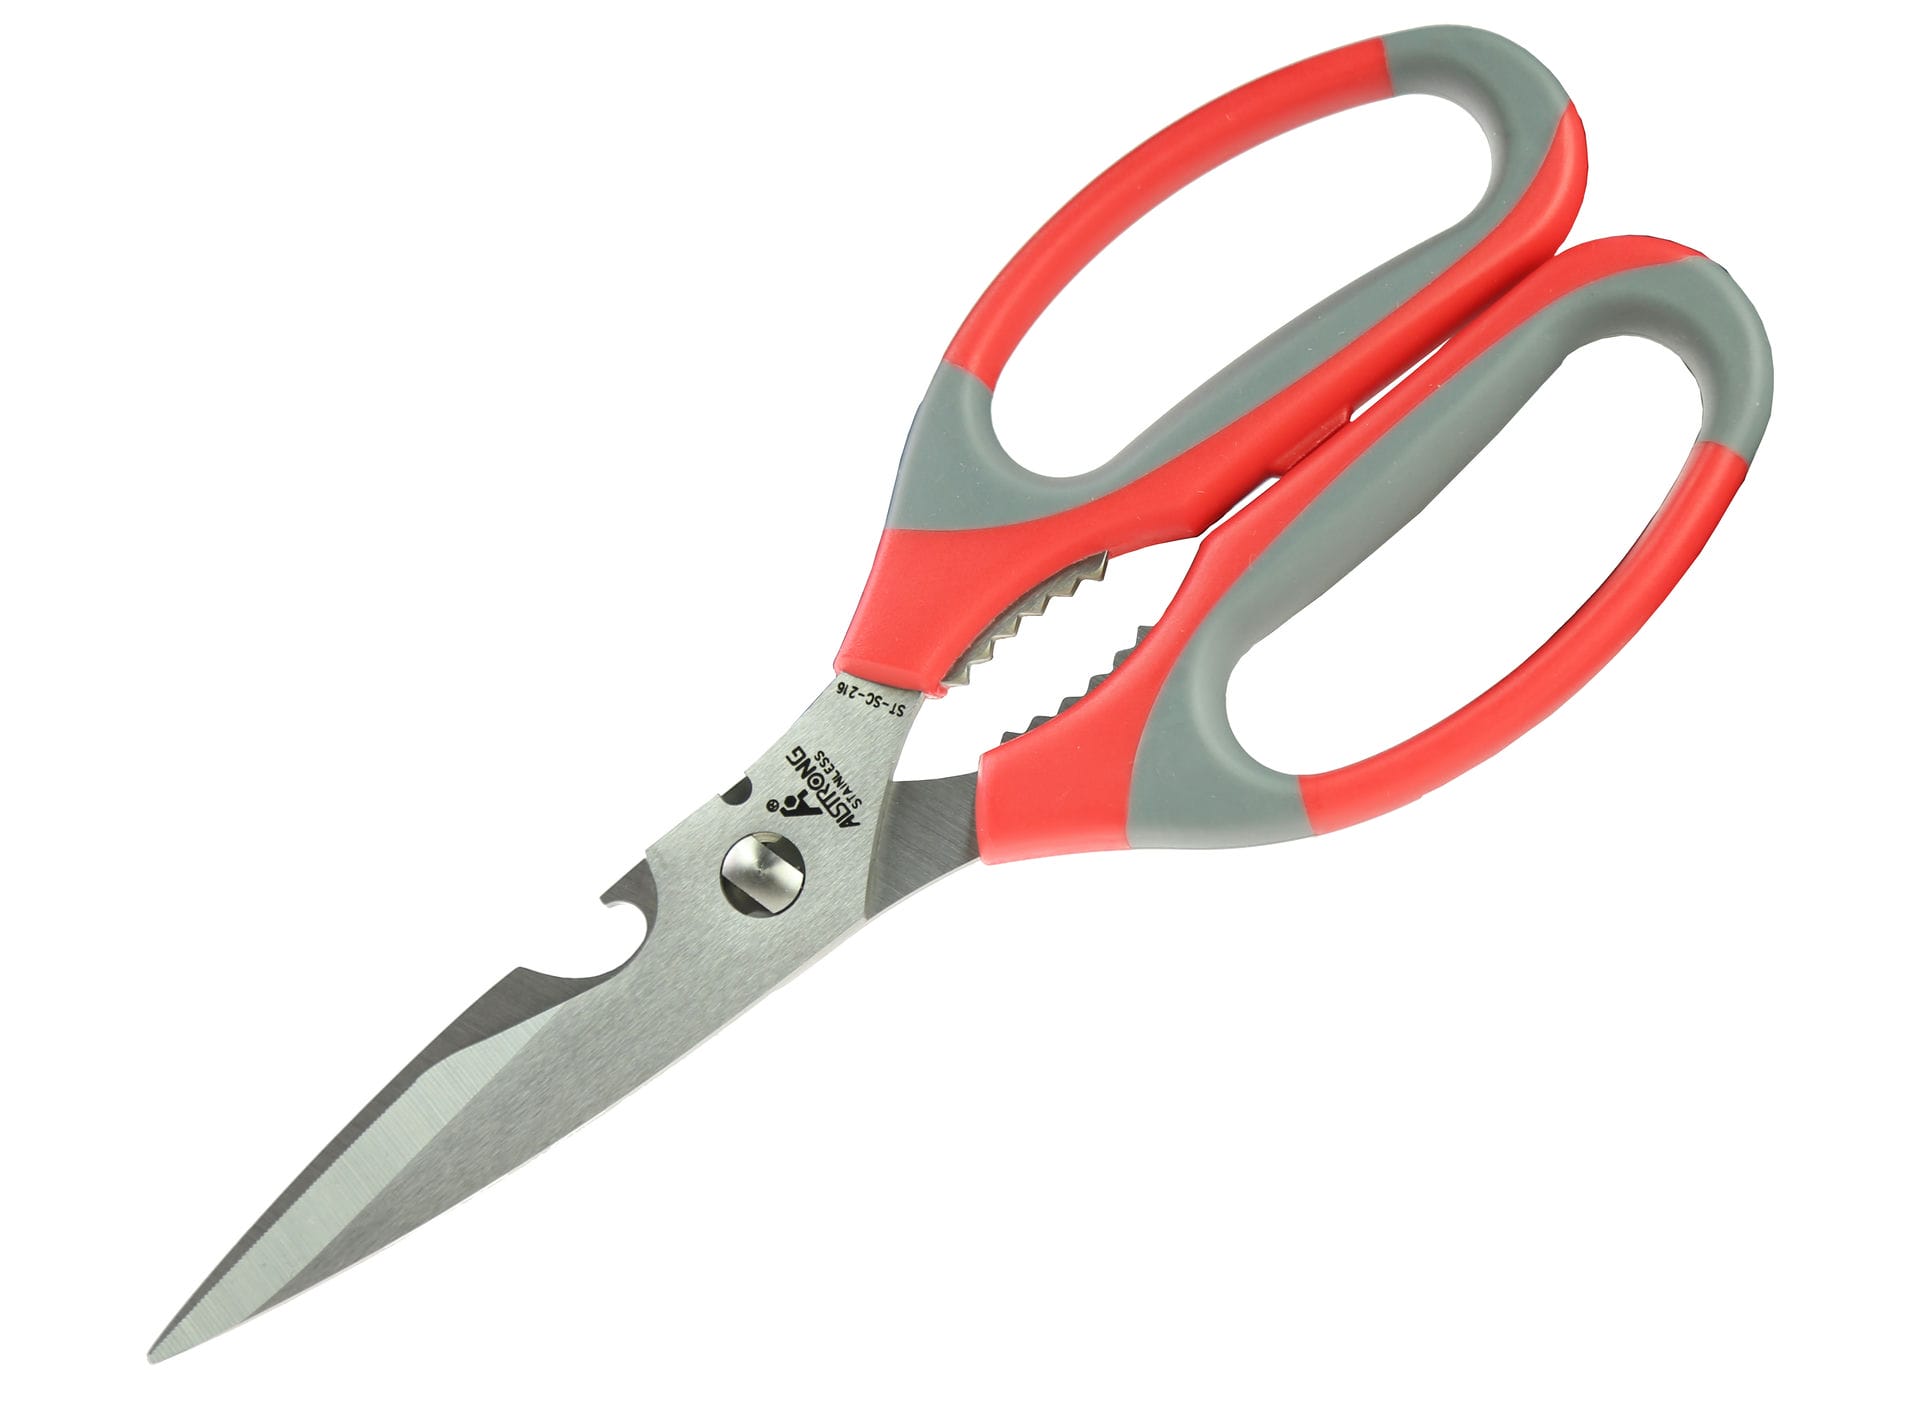 All-purpose culinary scissors